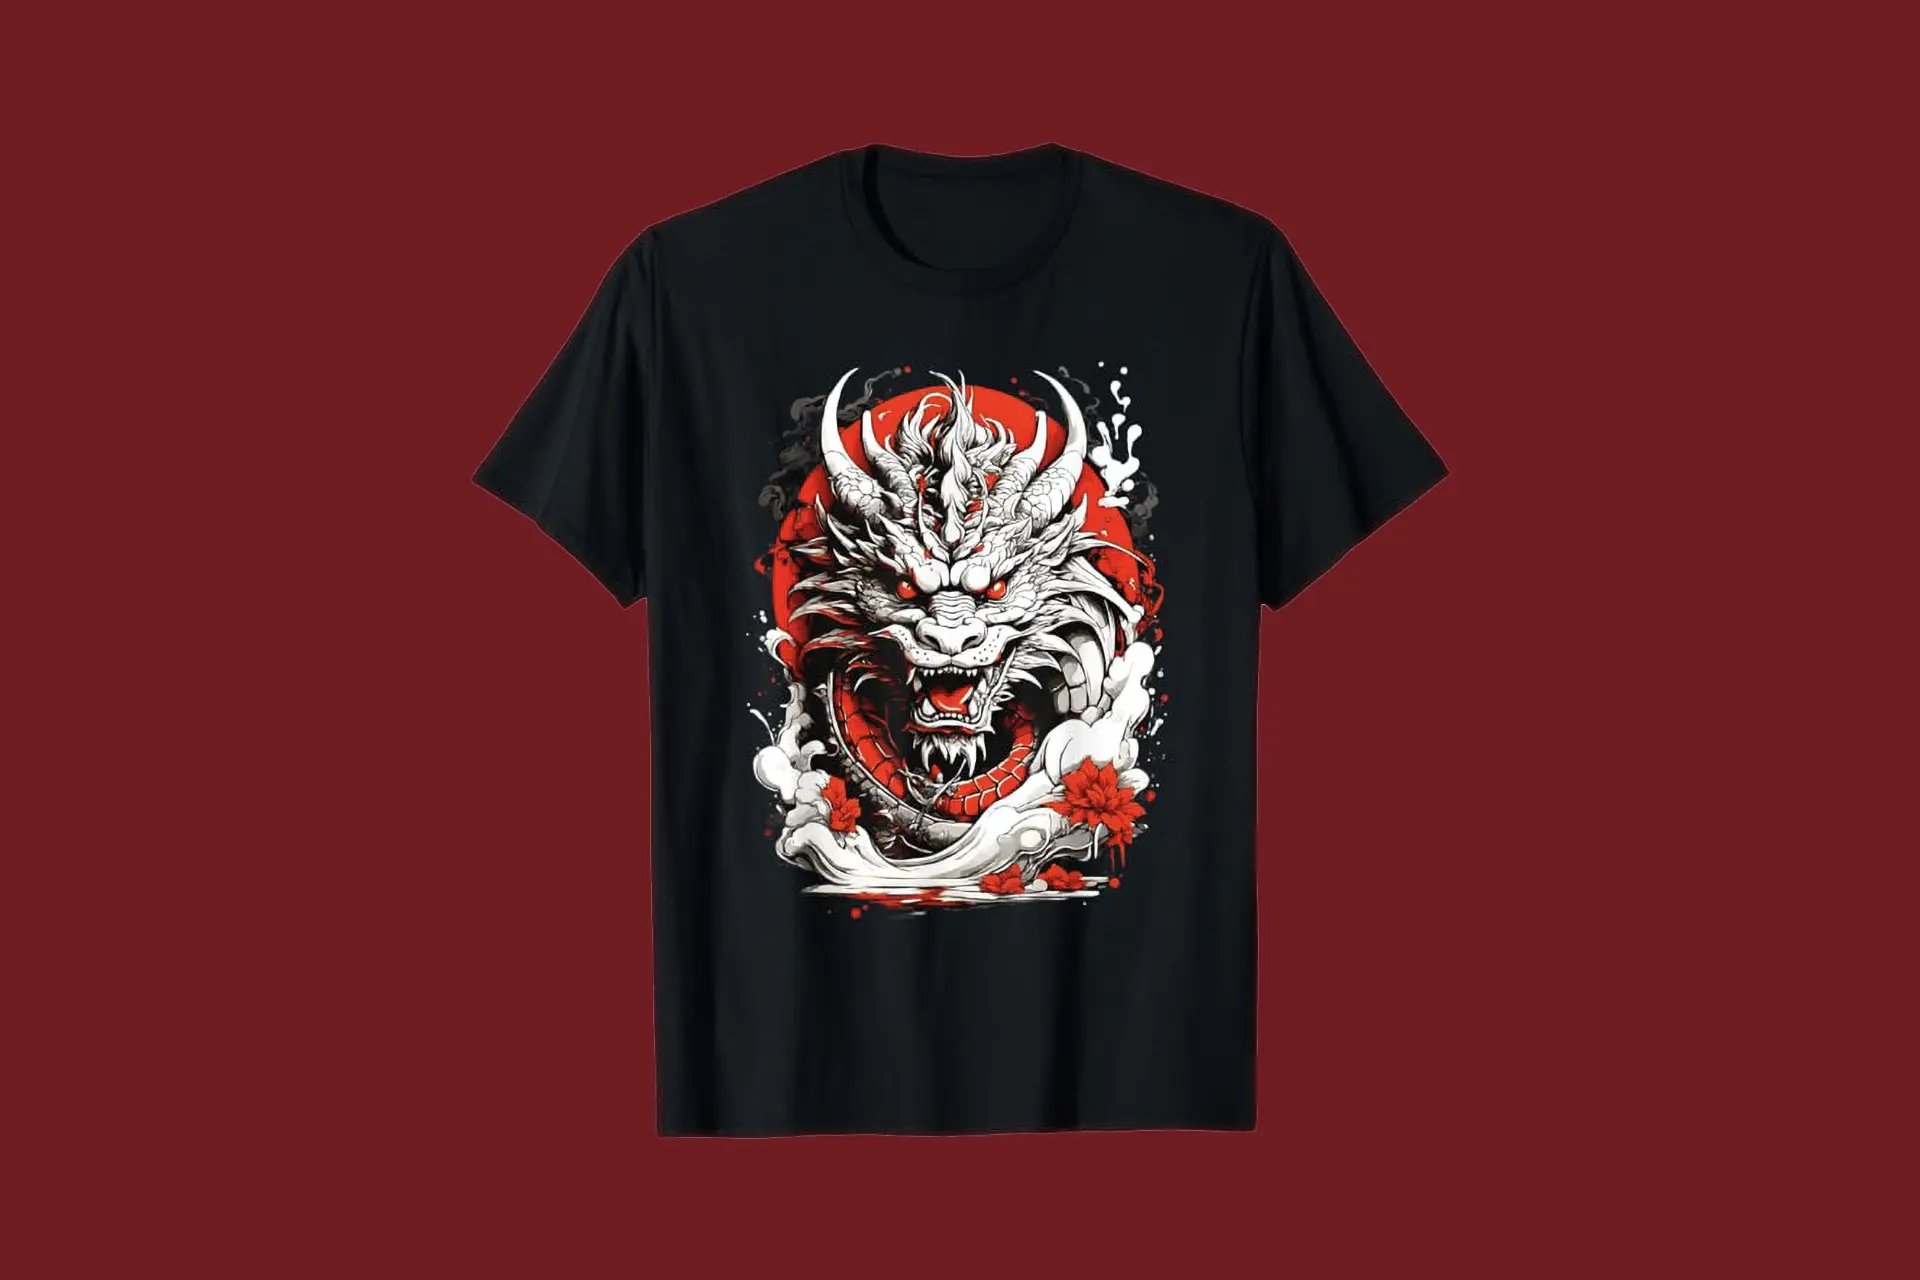 camisetas de dragones tusdragones.com